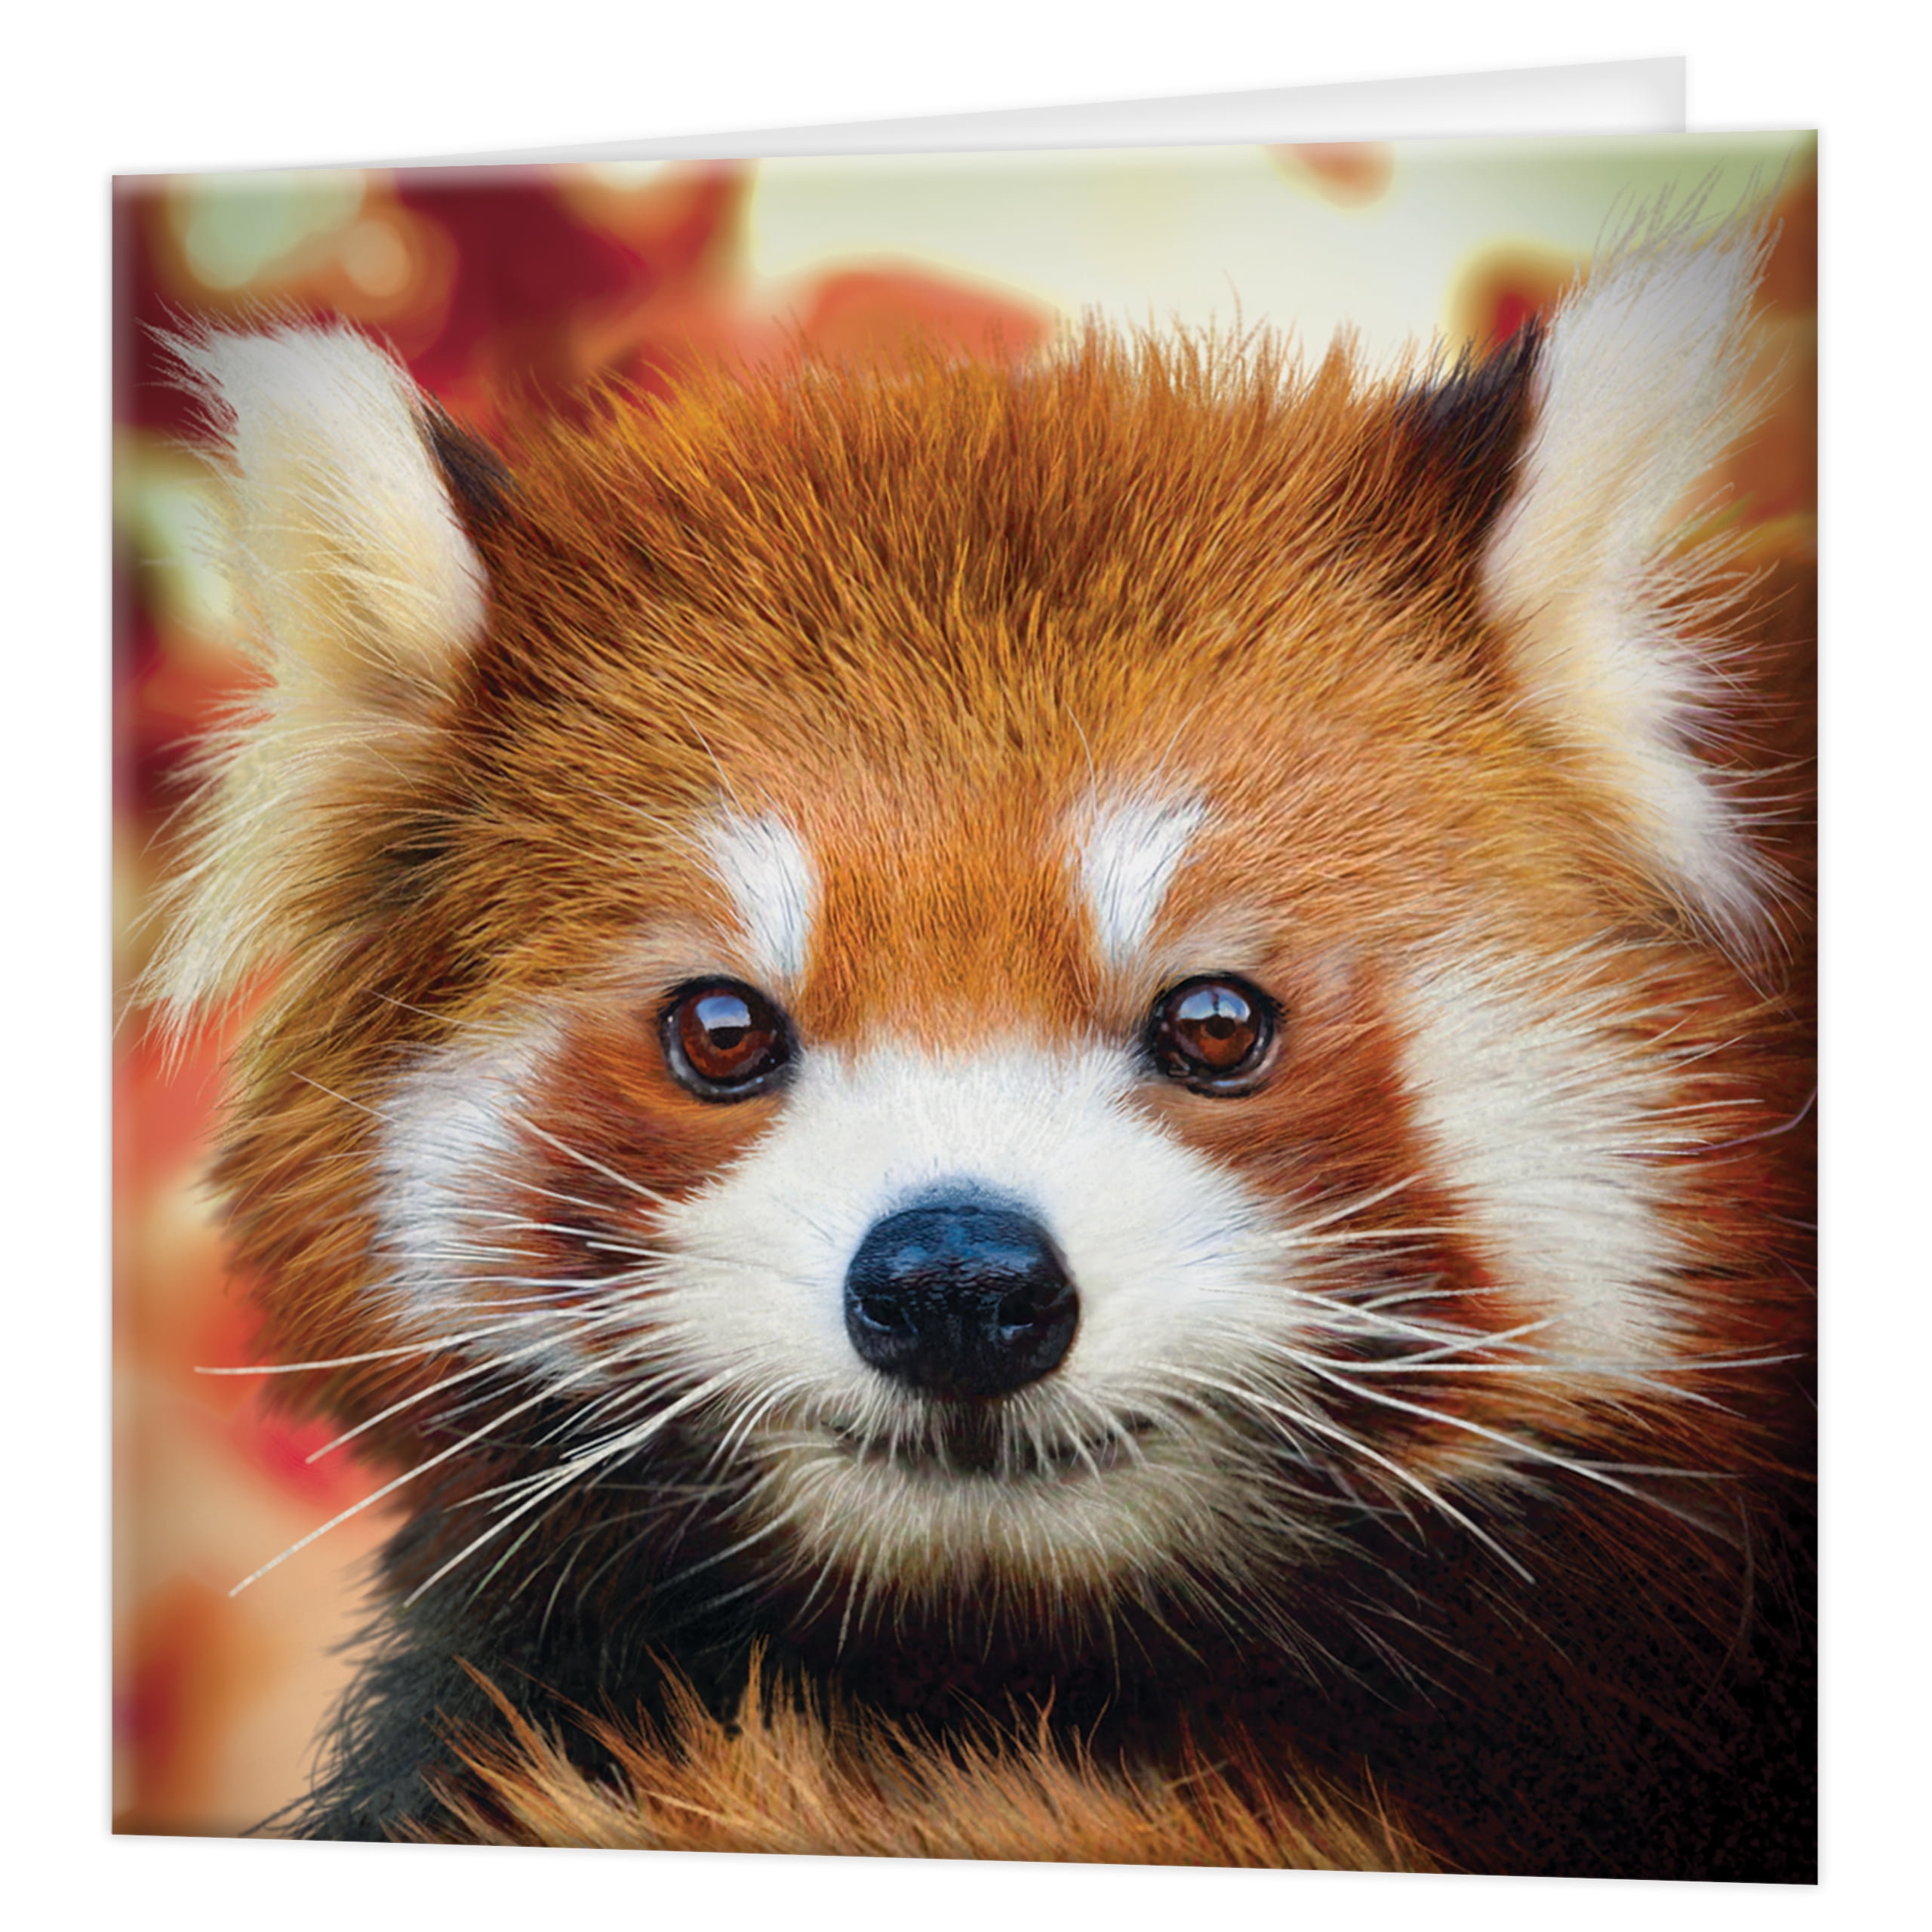 3D Postcard Lenticular Greeting Card RED FOX 